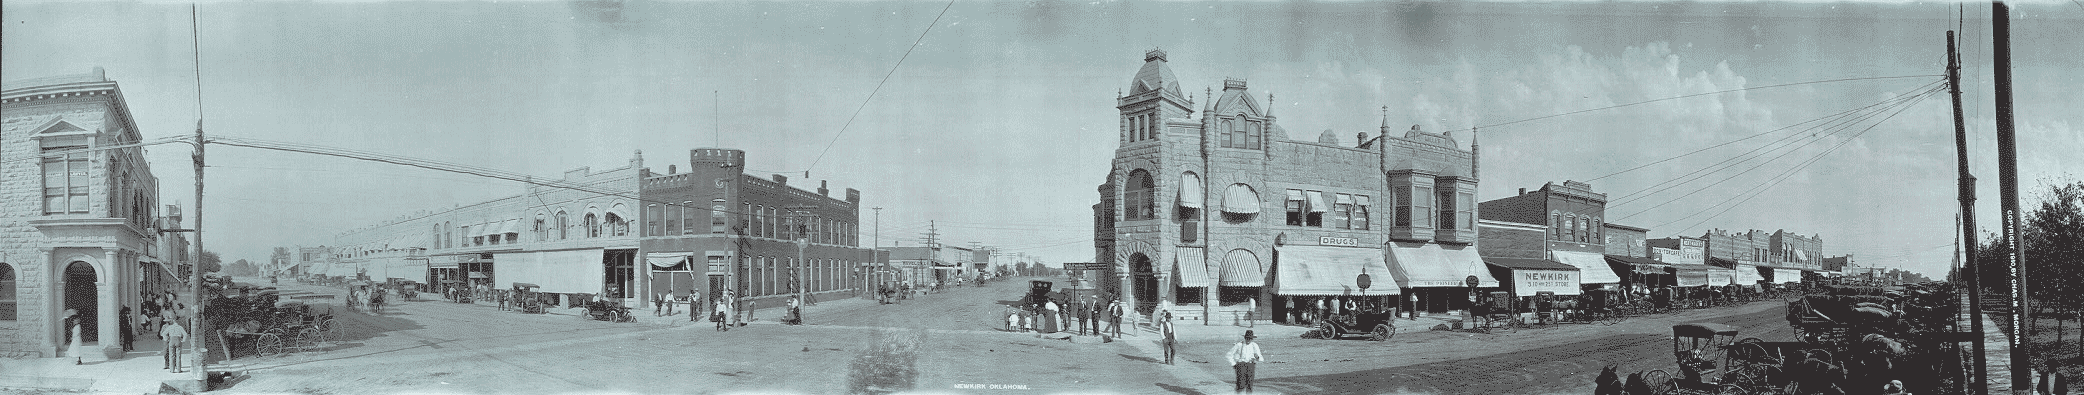 Newkirk circa 1910